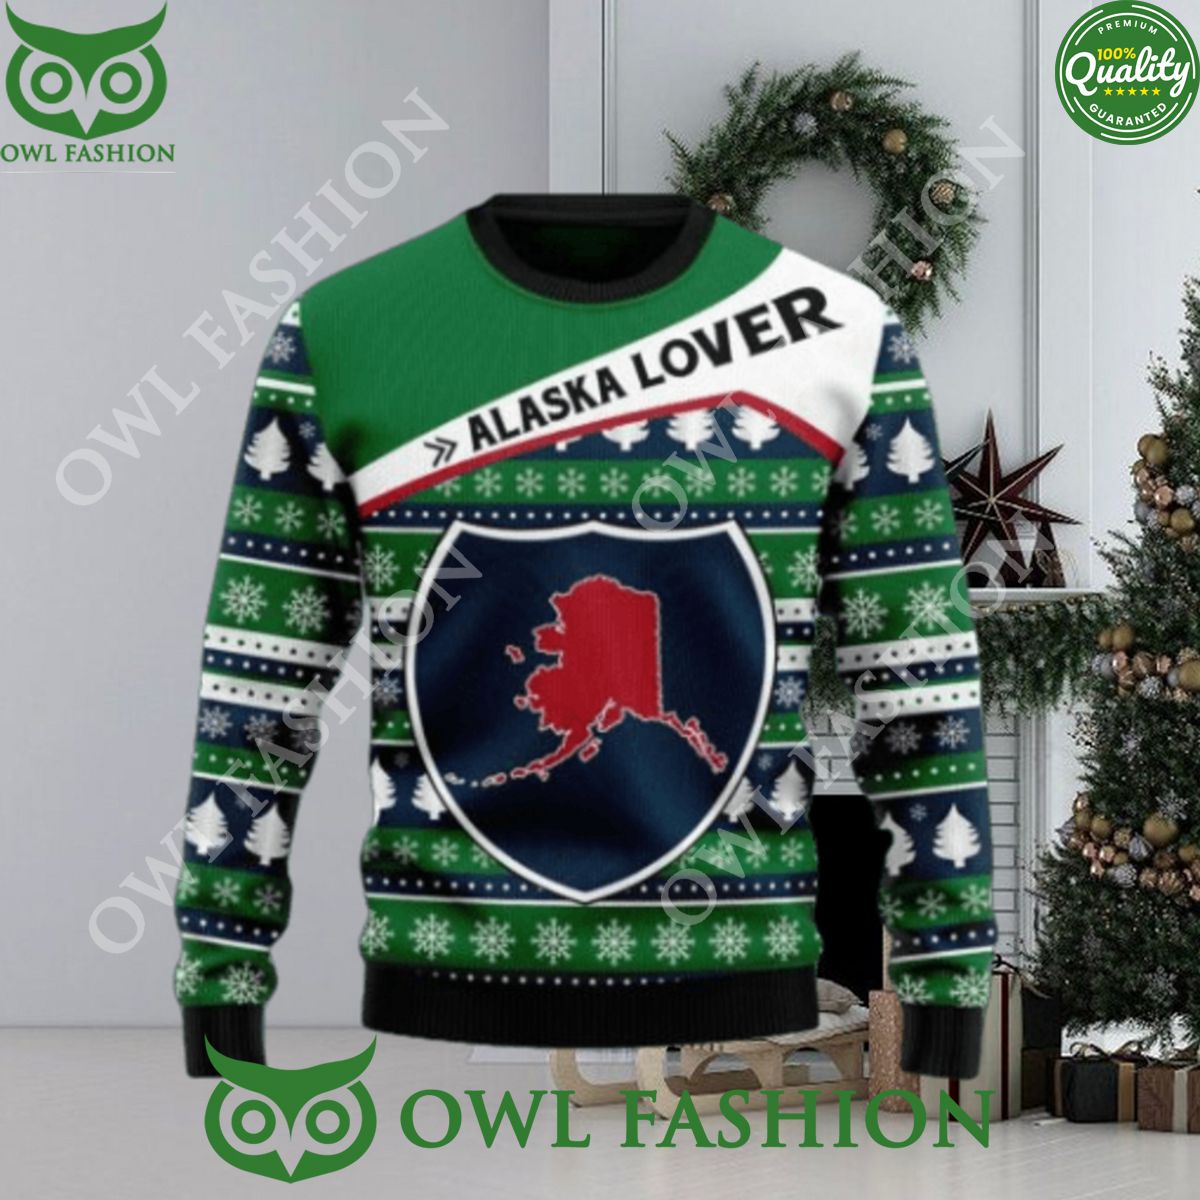 alaska lover christmas sweater jumper 1 rzP3k.jpg